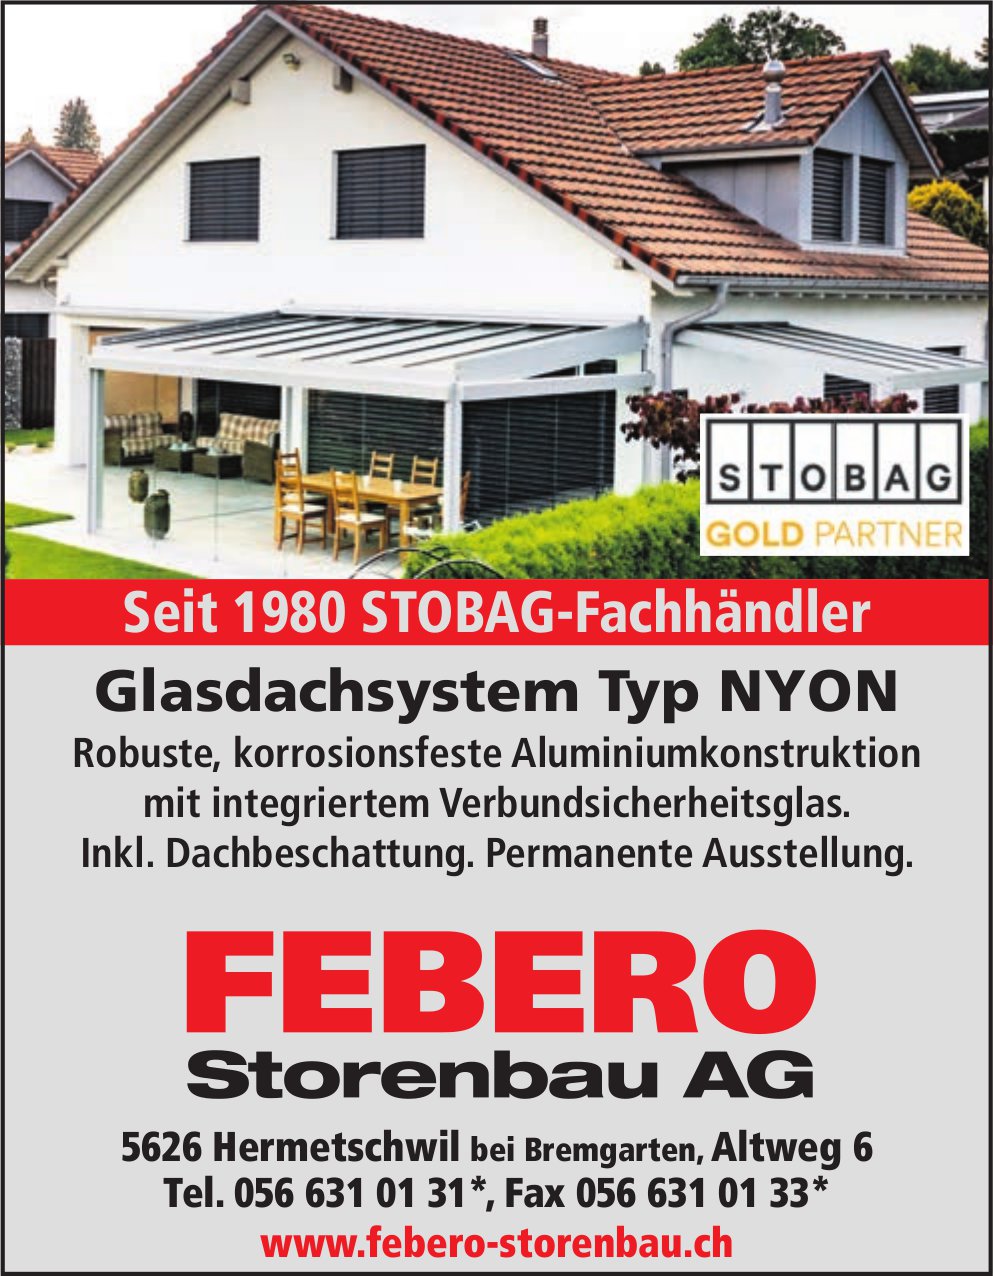 Febero Storenbau AG, Hermetschwil - Permanente Ausstellung.